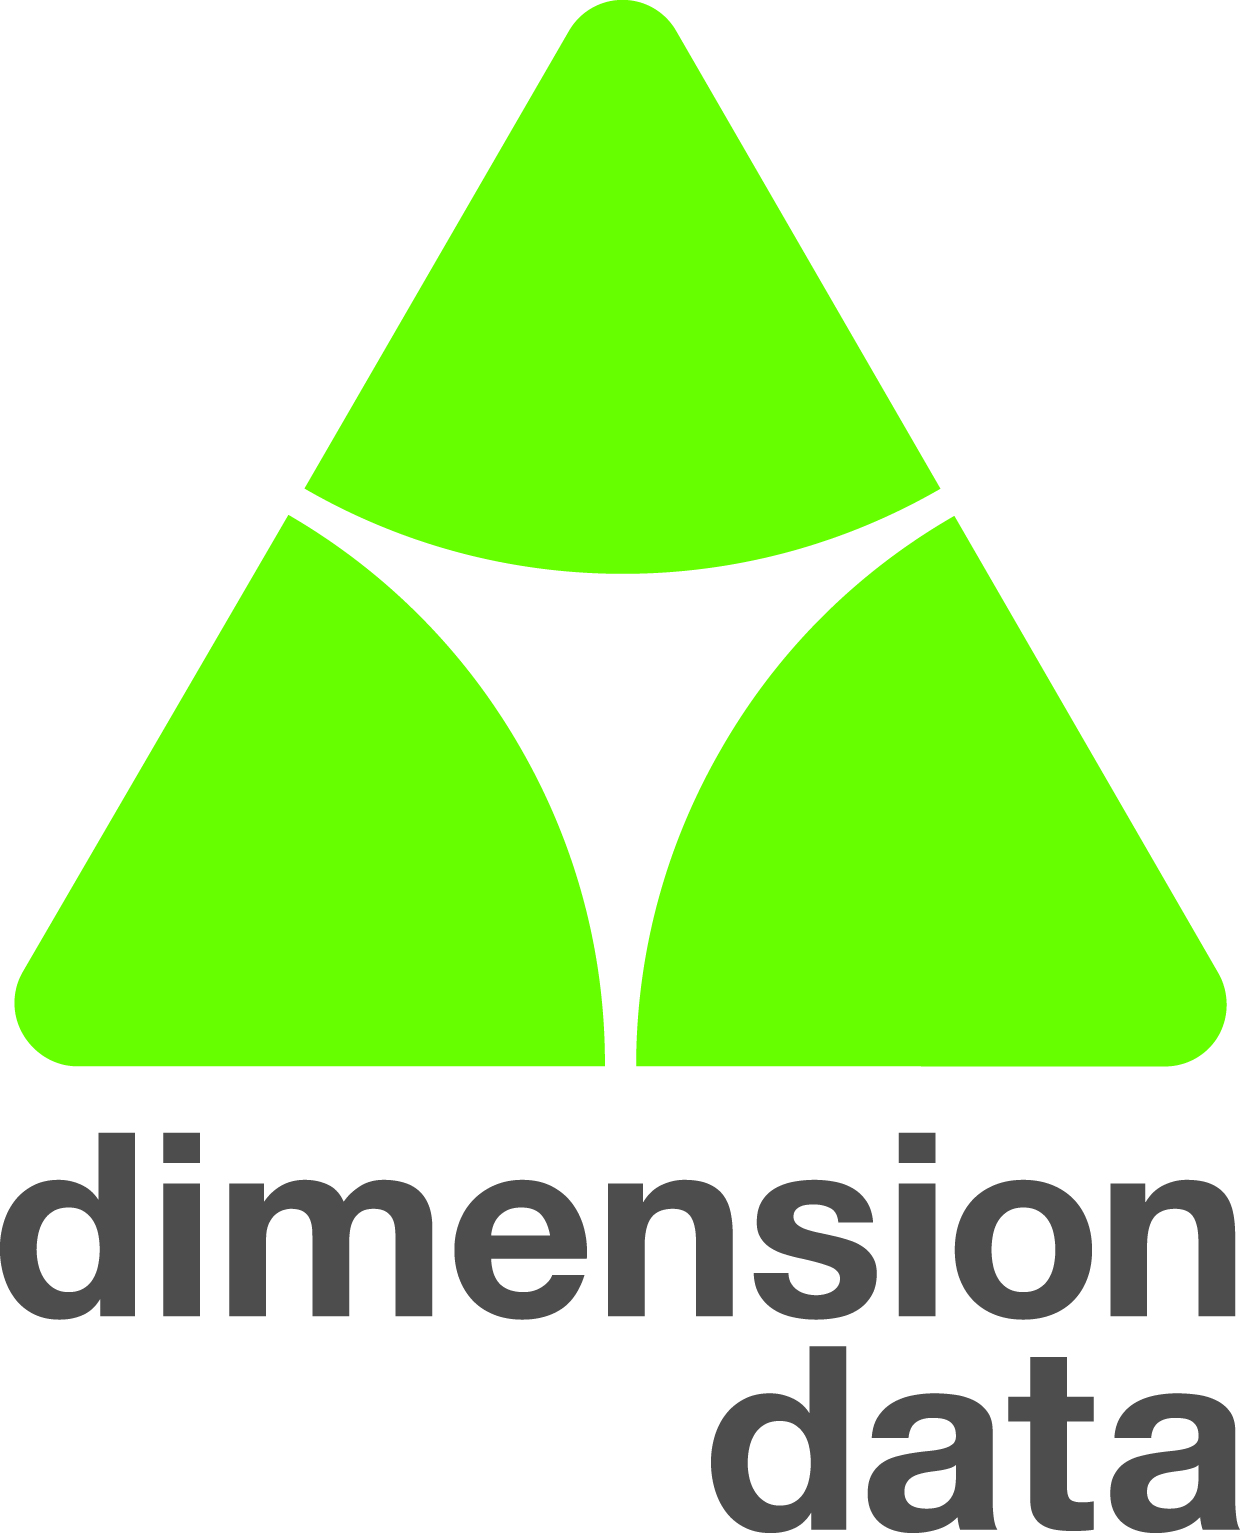 description: c:\users\jane\documents\jane\microsoft\ing direct-ws2012\dimension data logo.jpg